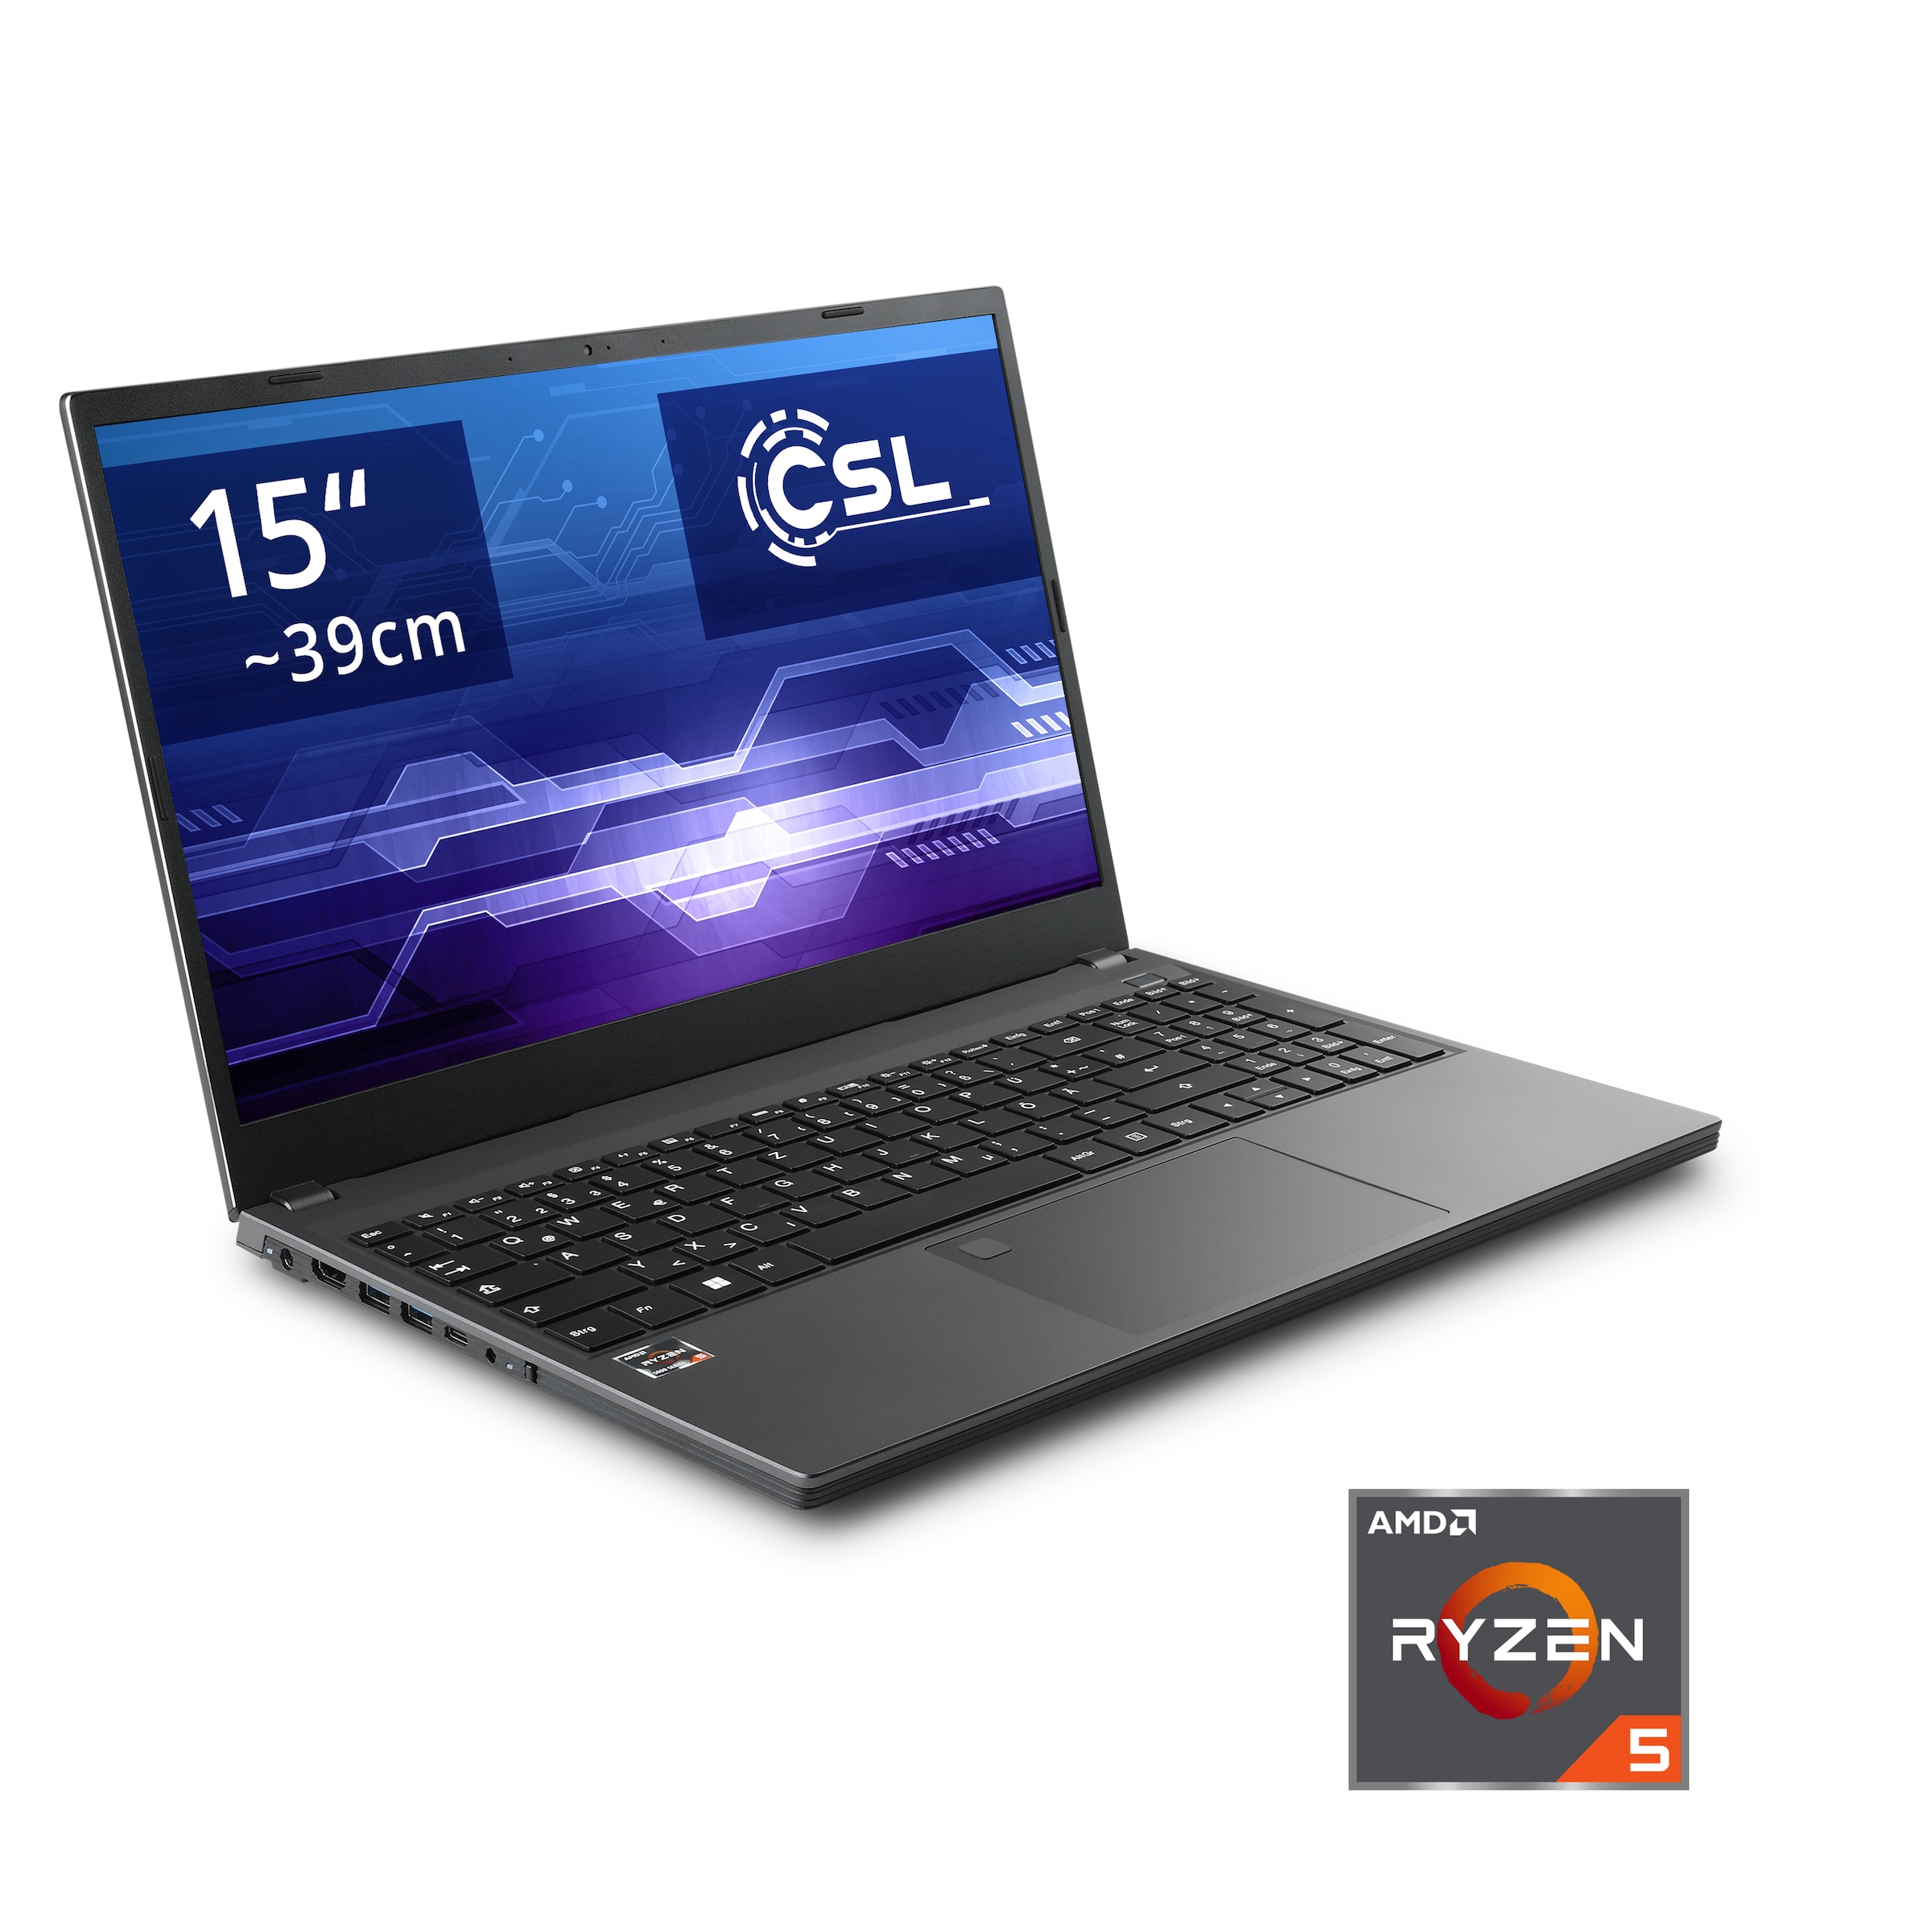 CSL Notebook »R'Evolve C15 5500U / 64GB / 2000GB / Windows 11 Home«, 39,6 cm, / 15,6 Zoll, 2000 GB SSD